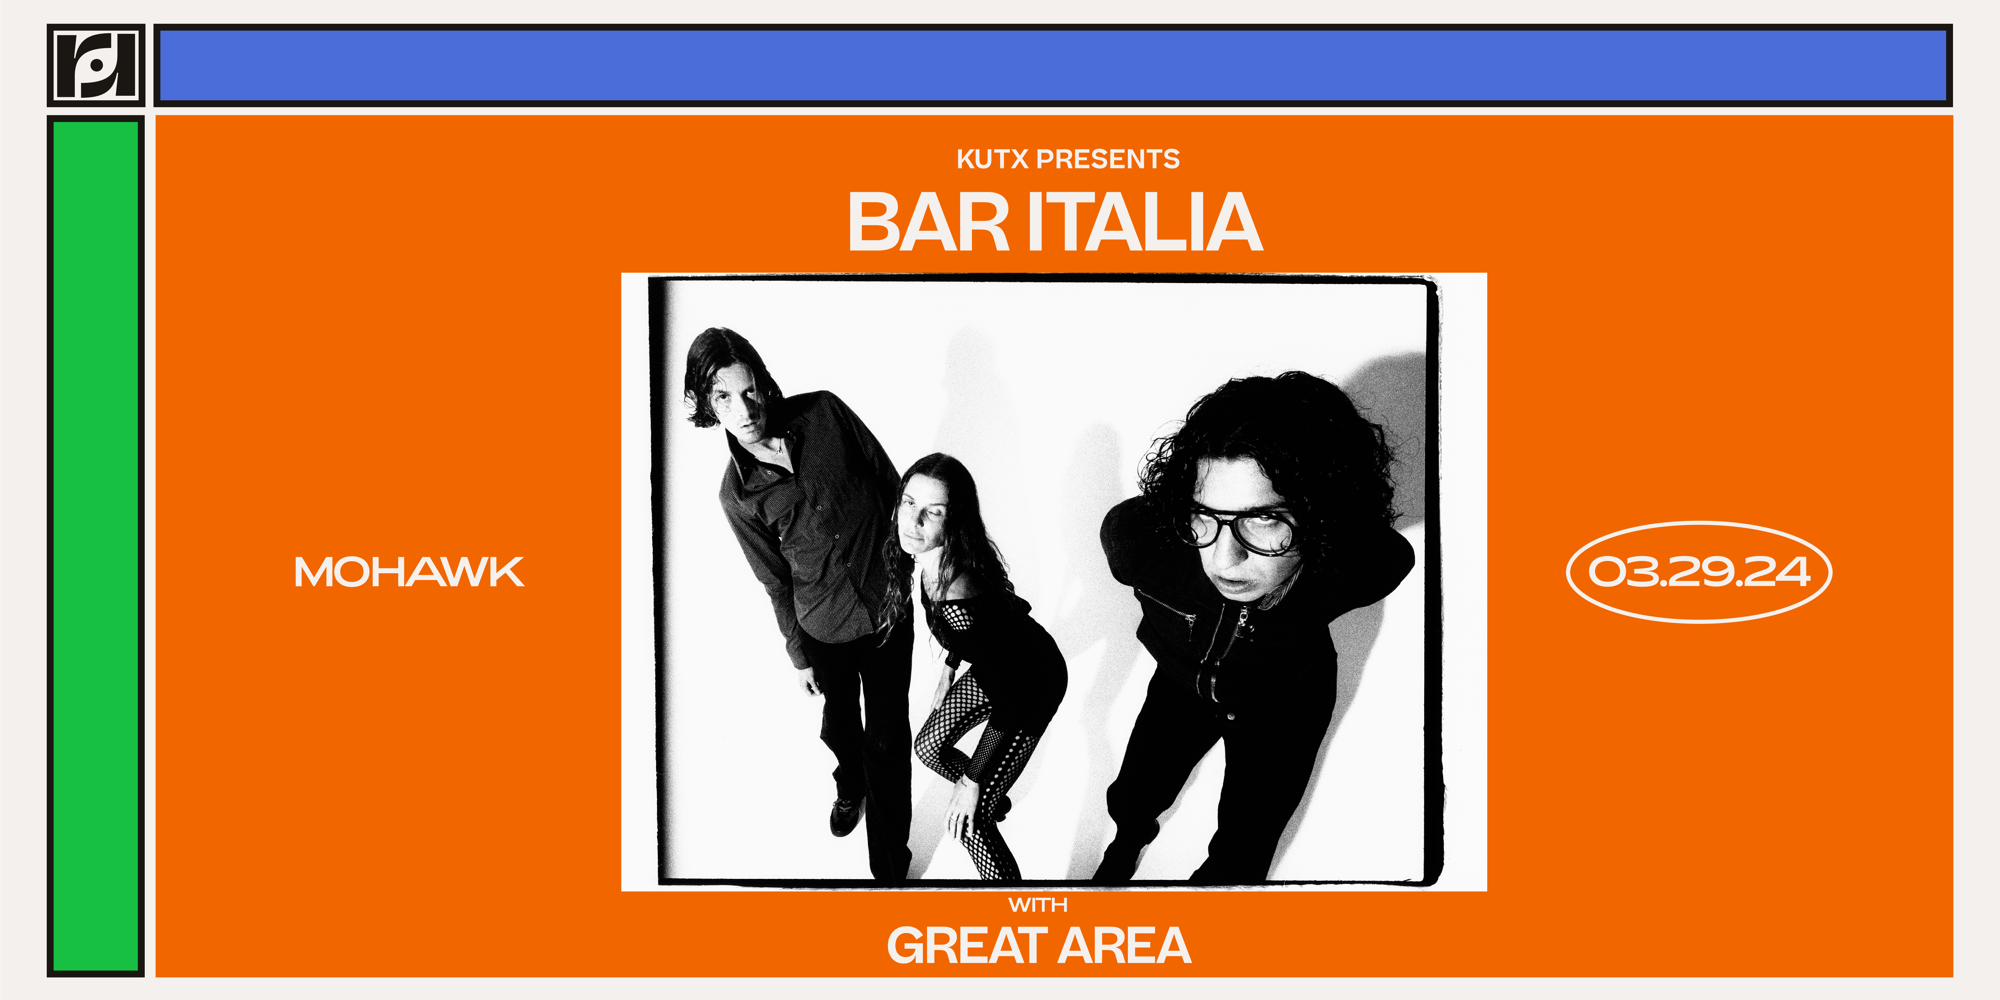 KUTX Presents: bar italia w/ Great Area at Mohawk promotional image